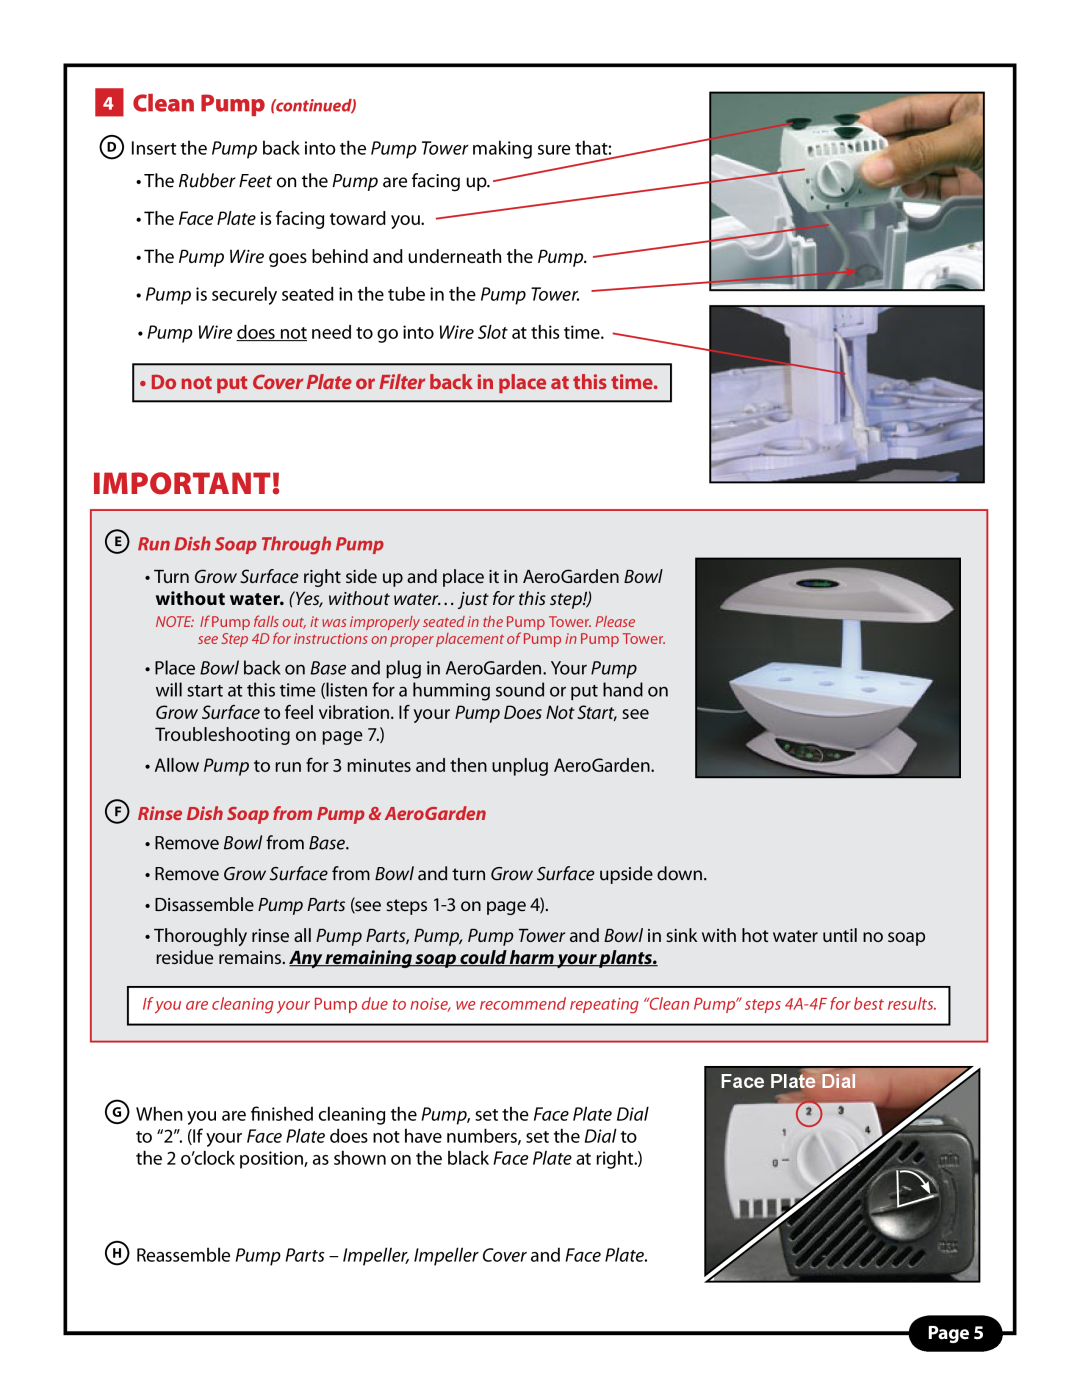 AeroGarden PRO manual 4Clean Pump continued, Face Plate Dial, ERun Dish Soap Through Pump, Page 